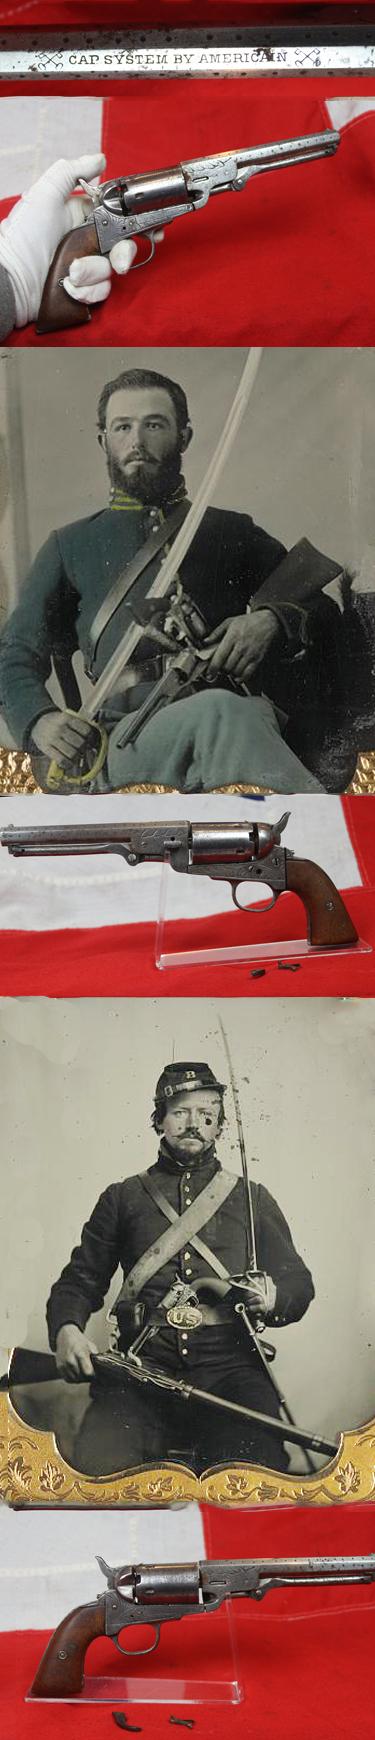 A Very Interesting Antique Civil War Period Belgian 1850's Colt Navy Copy Patent Infringement Revolver